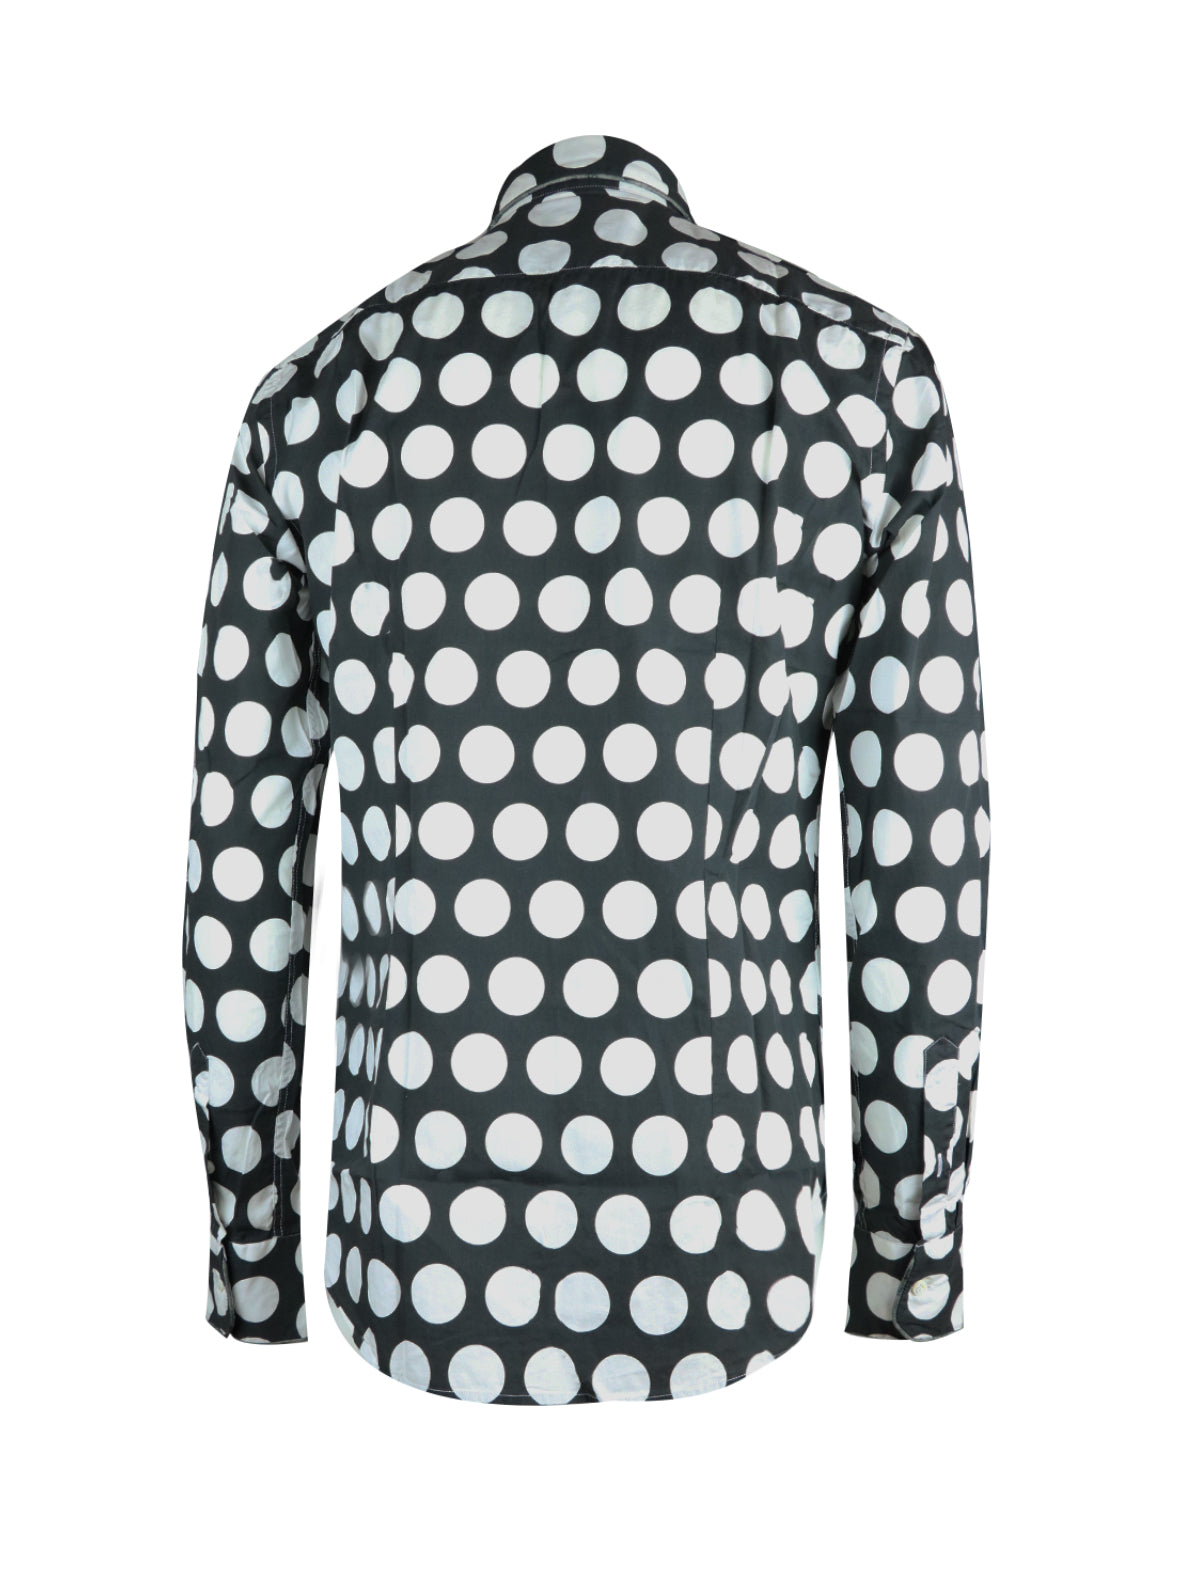 Gabriele Pasini Shirt in Black/White Polka Dots